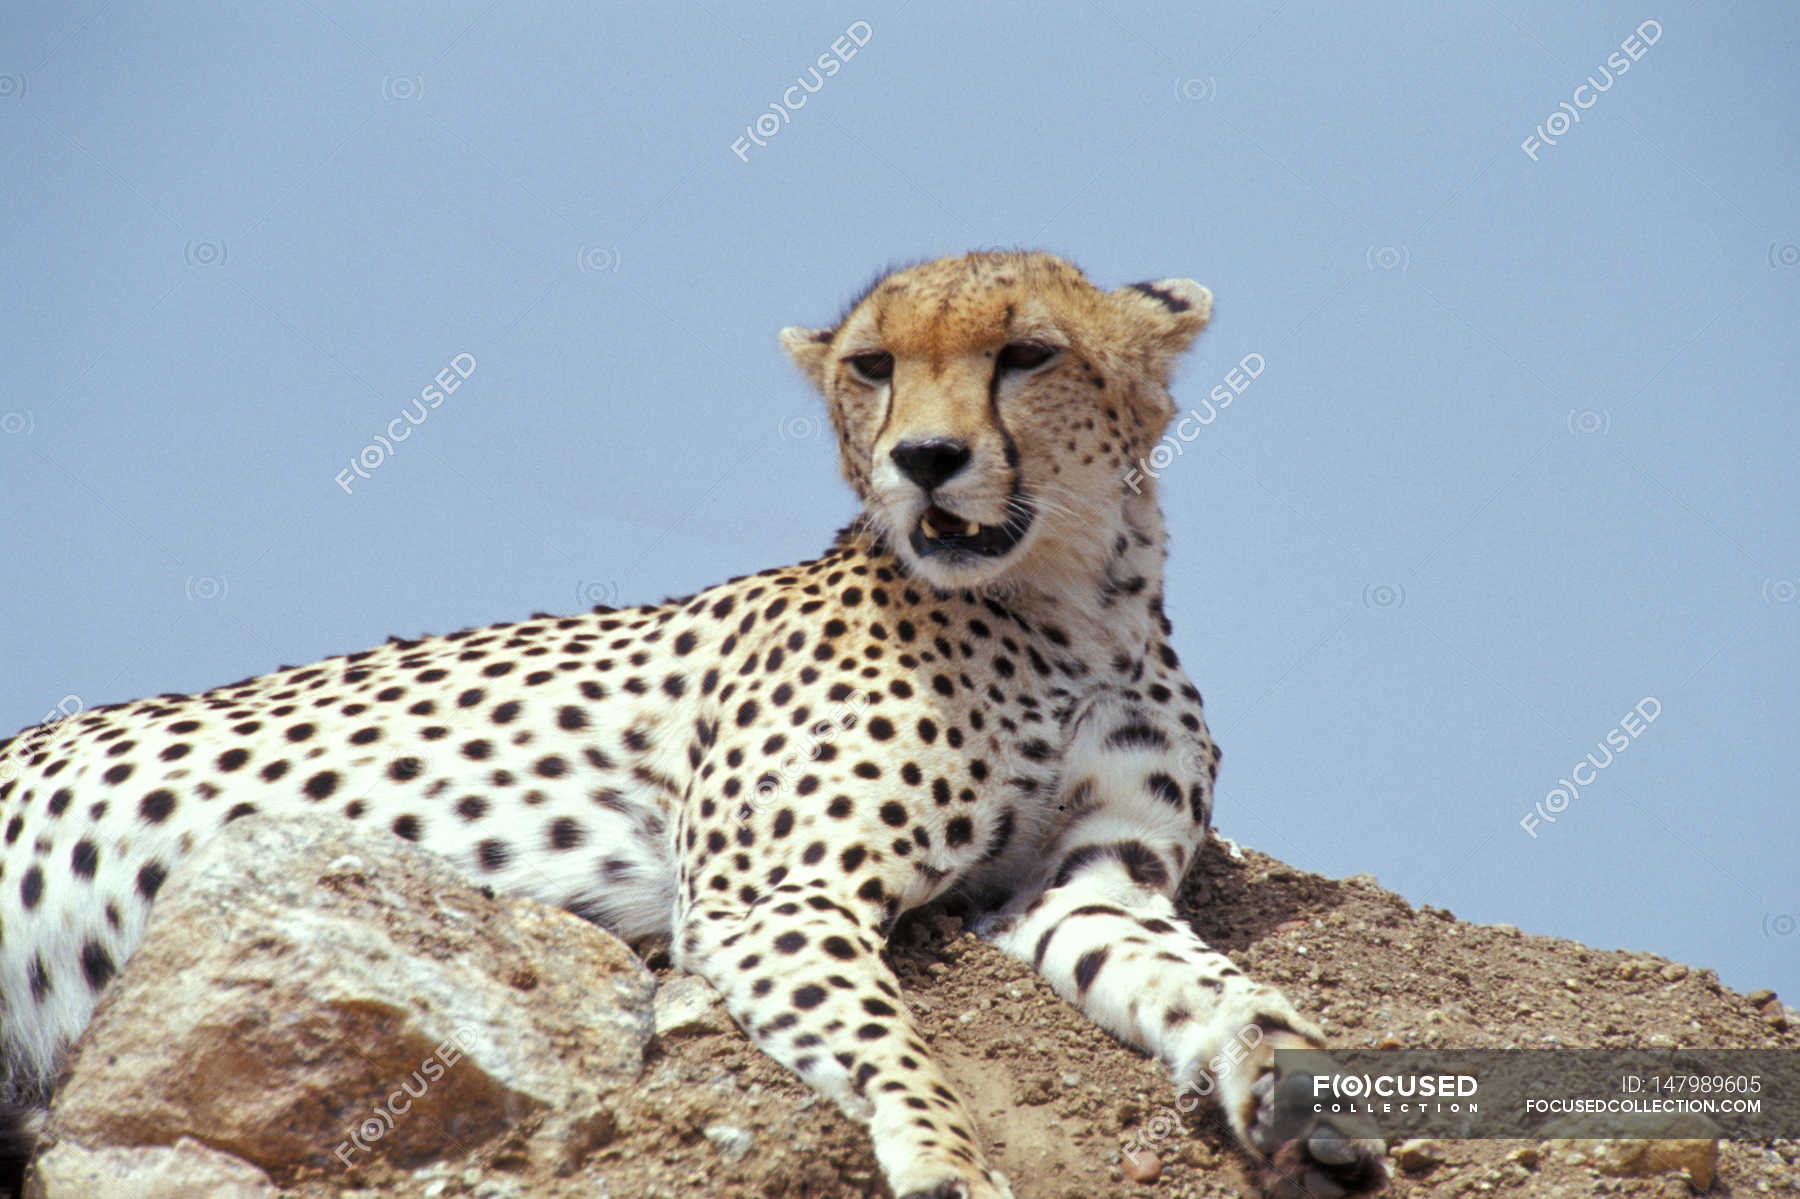 Wild cheetah in habitat — Stock Photo | #147989605